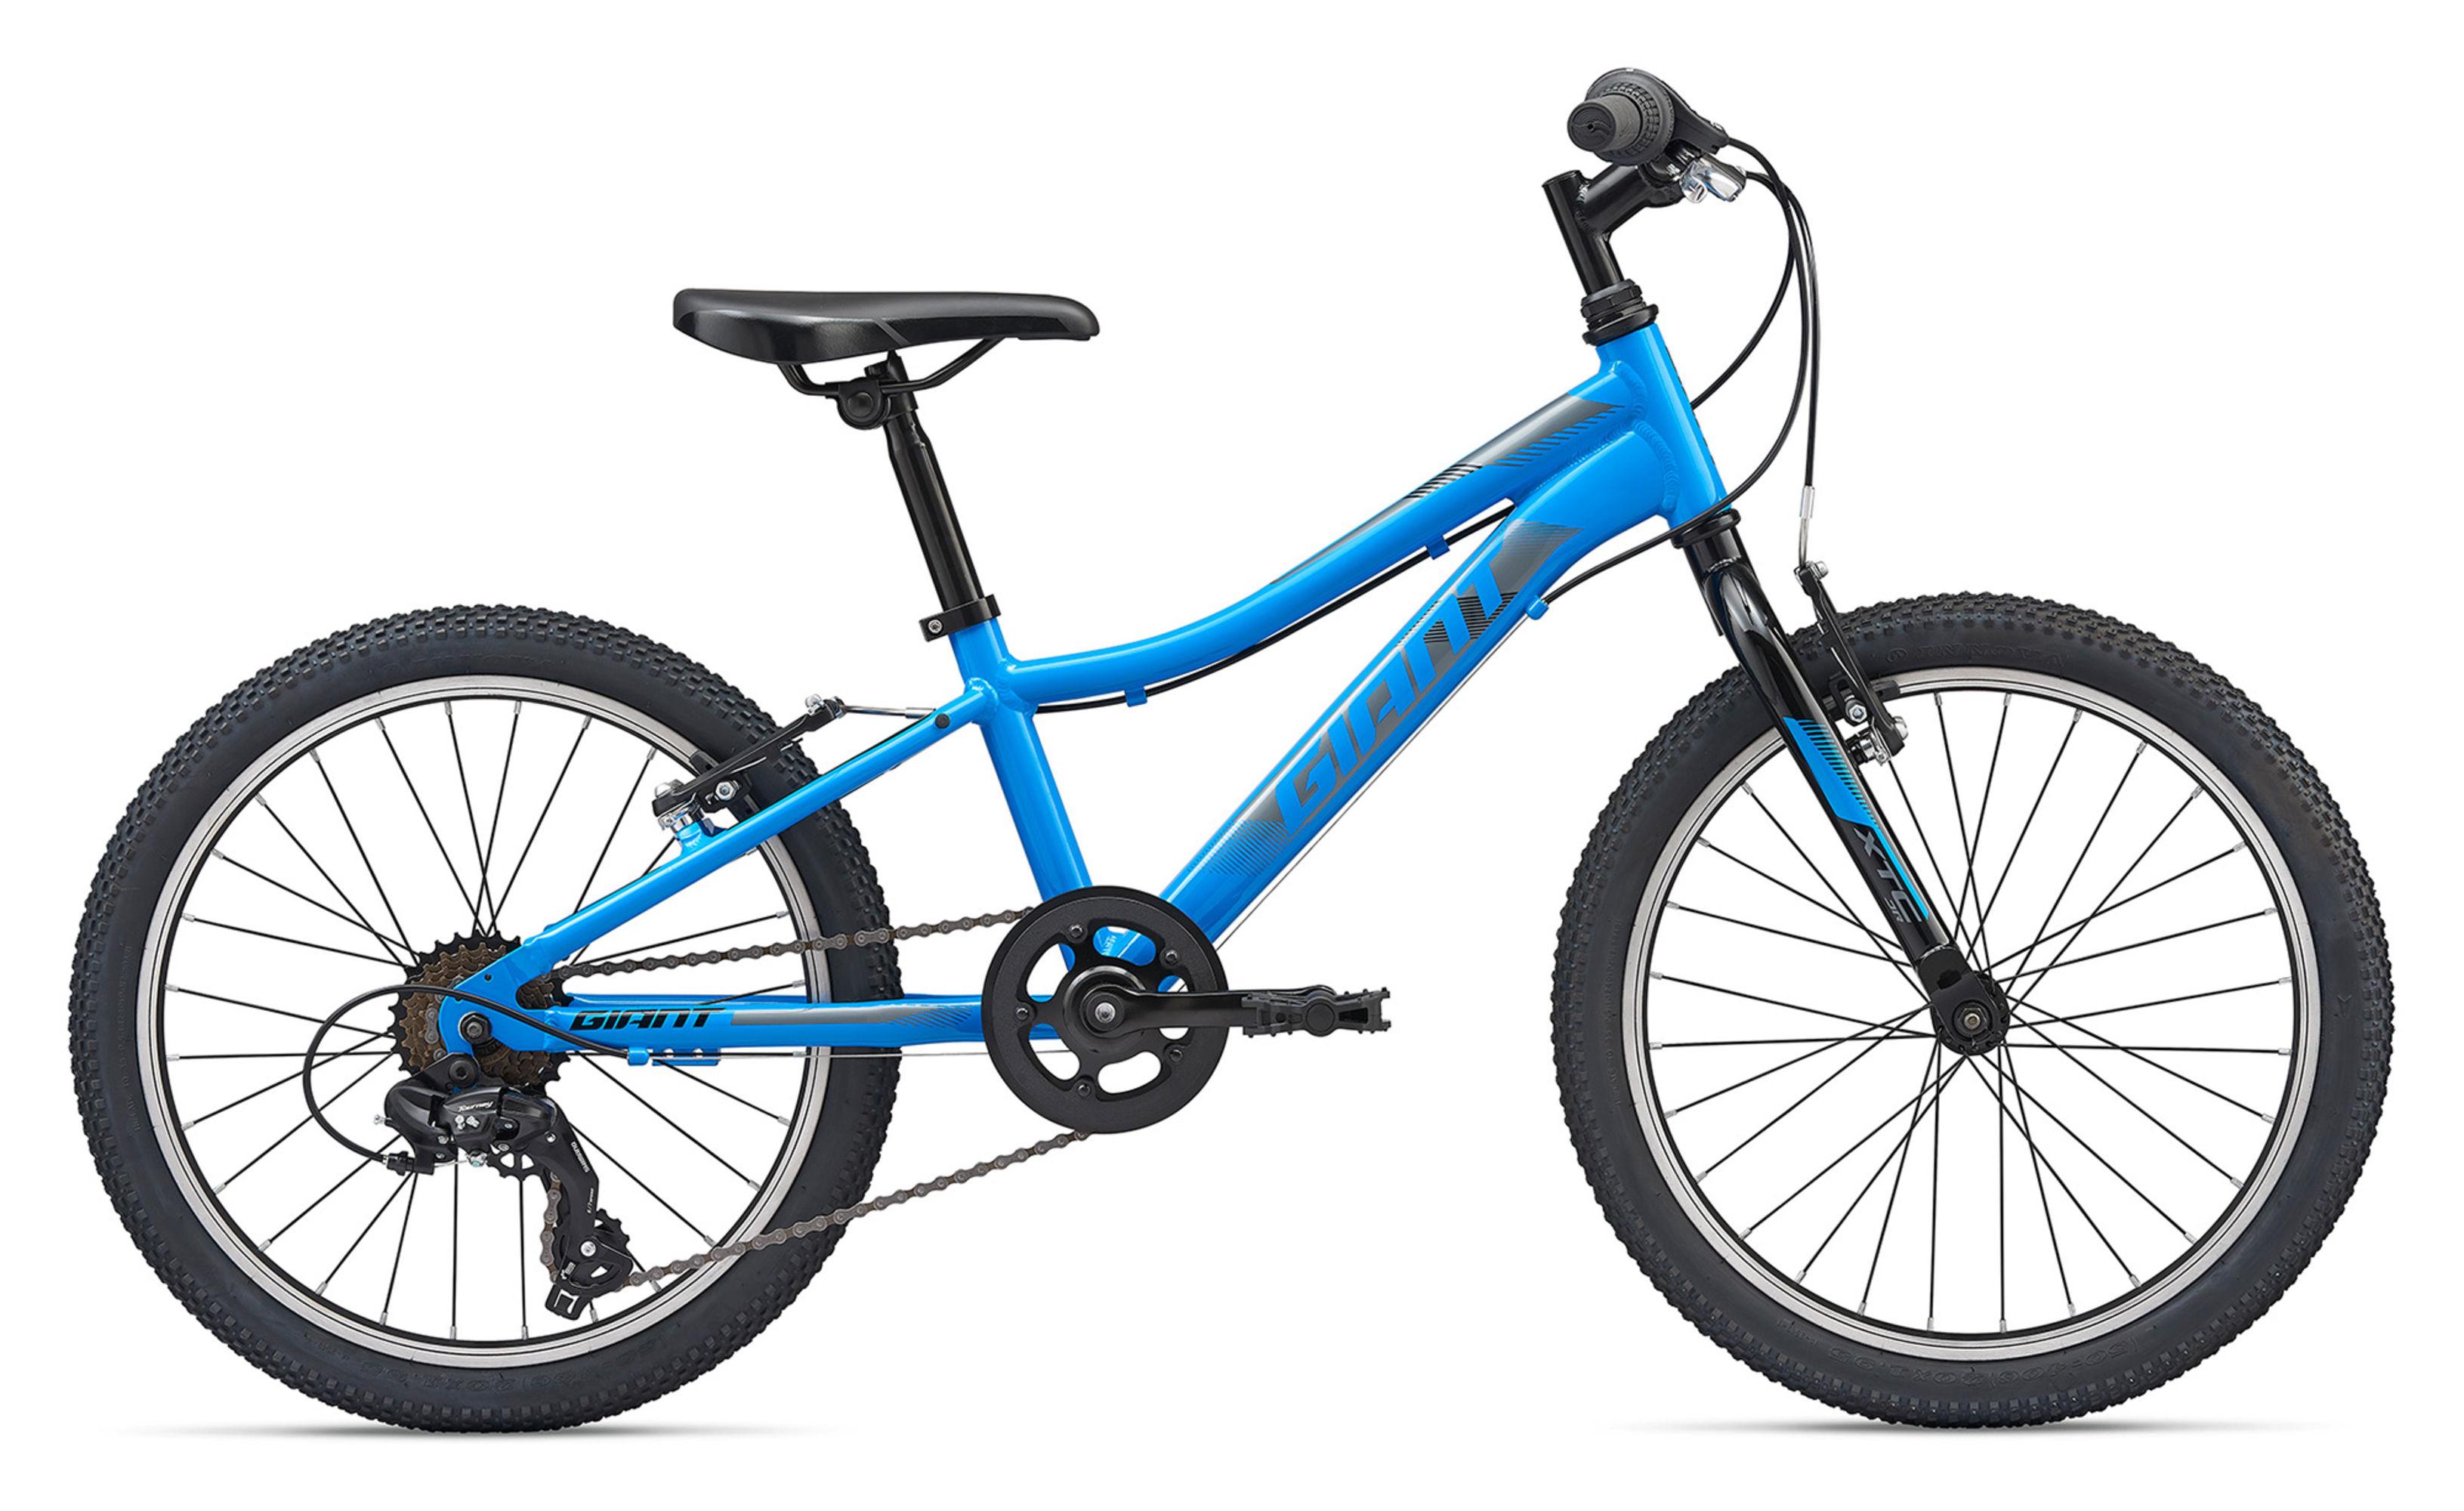  Отзывы о Детском велосипеде Giant XTC Jr 20 Lite 2020